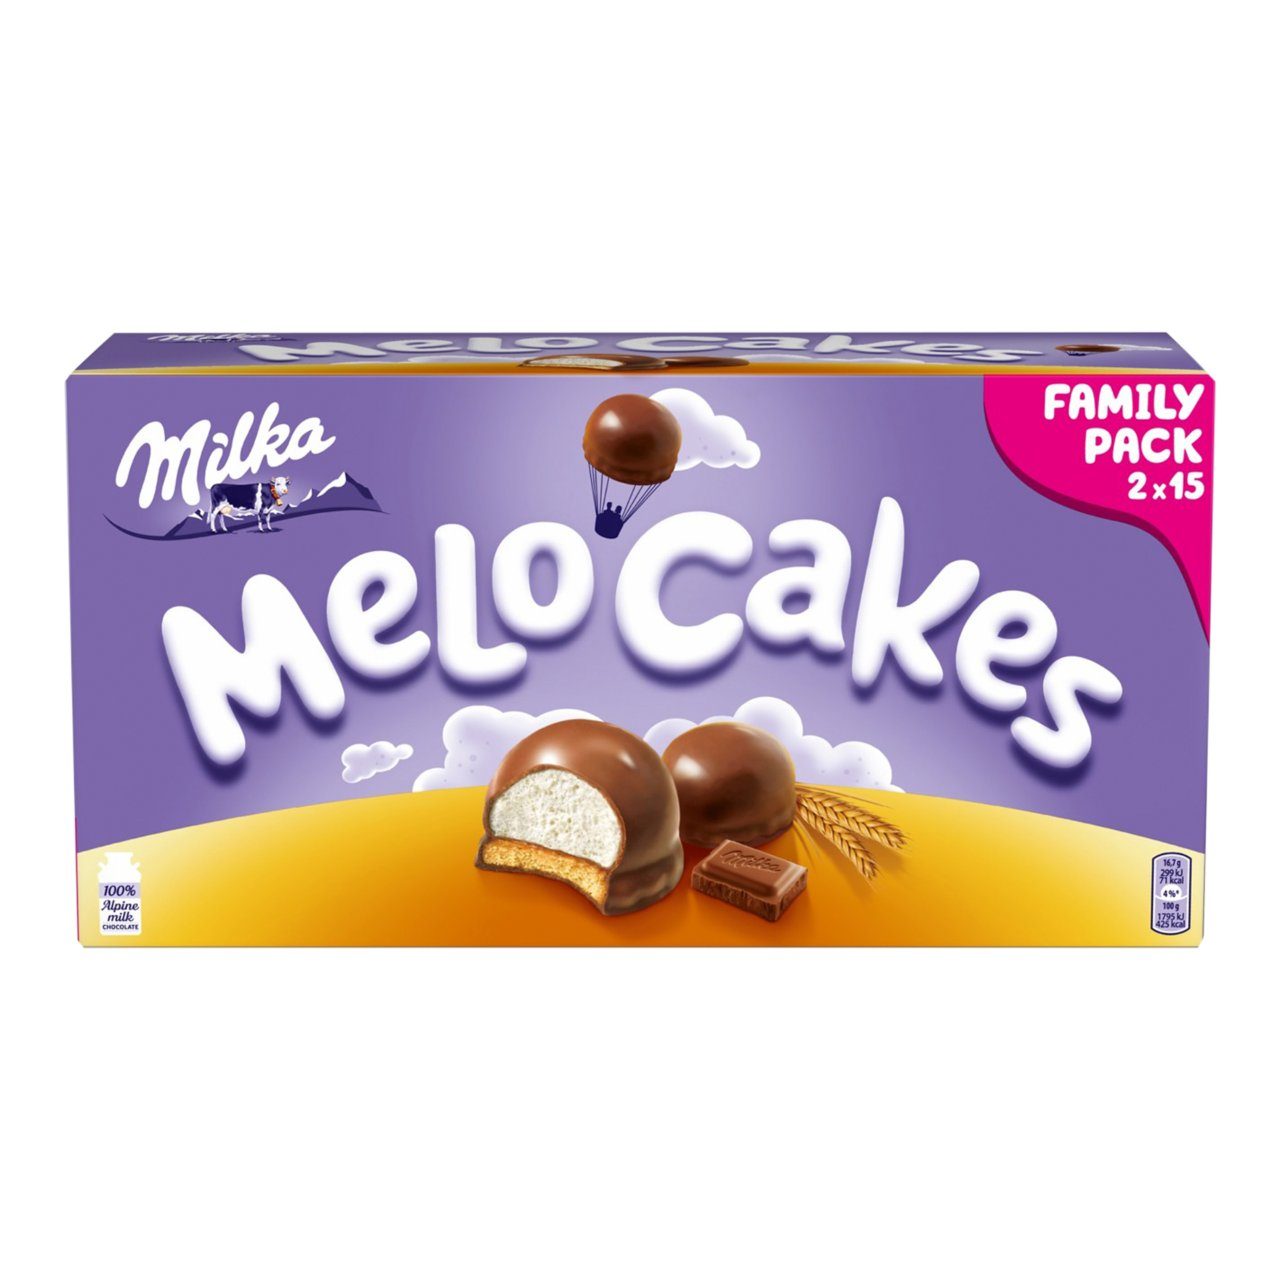 Melo-cakes